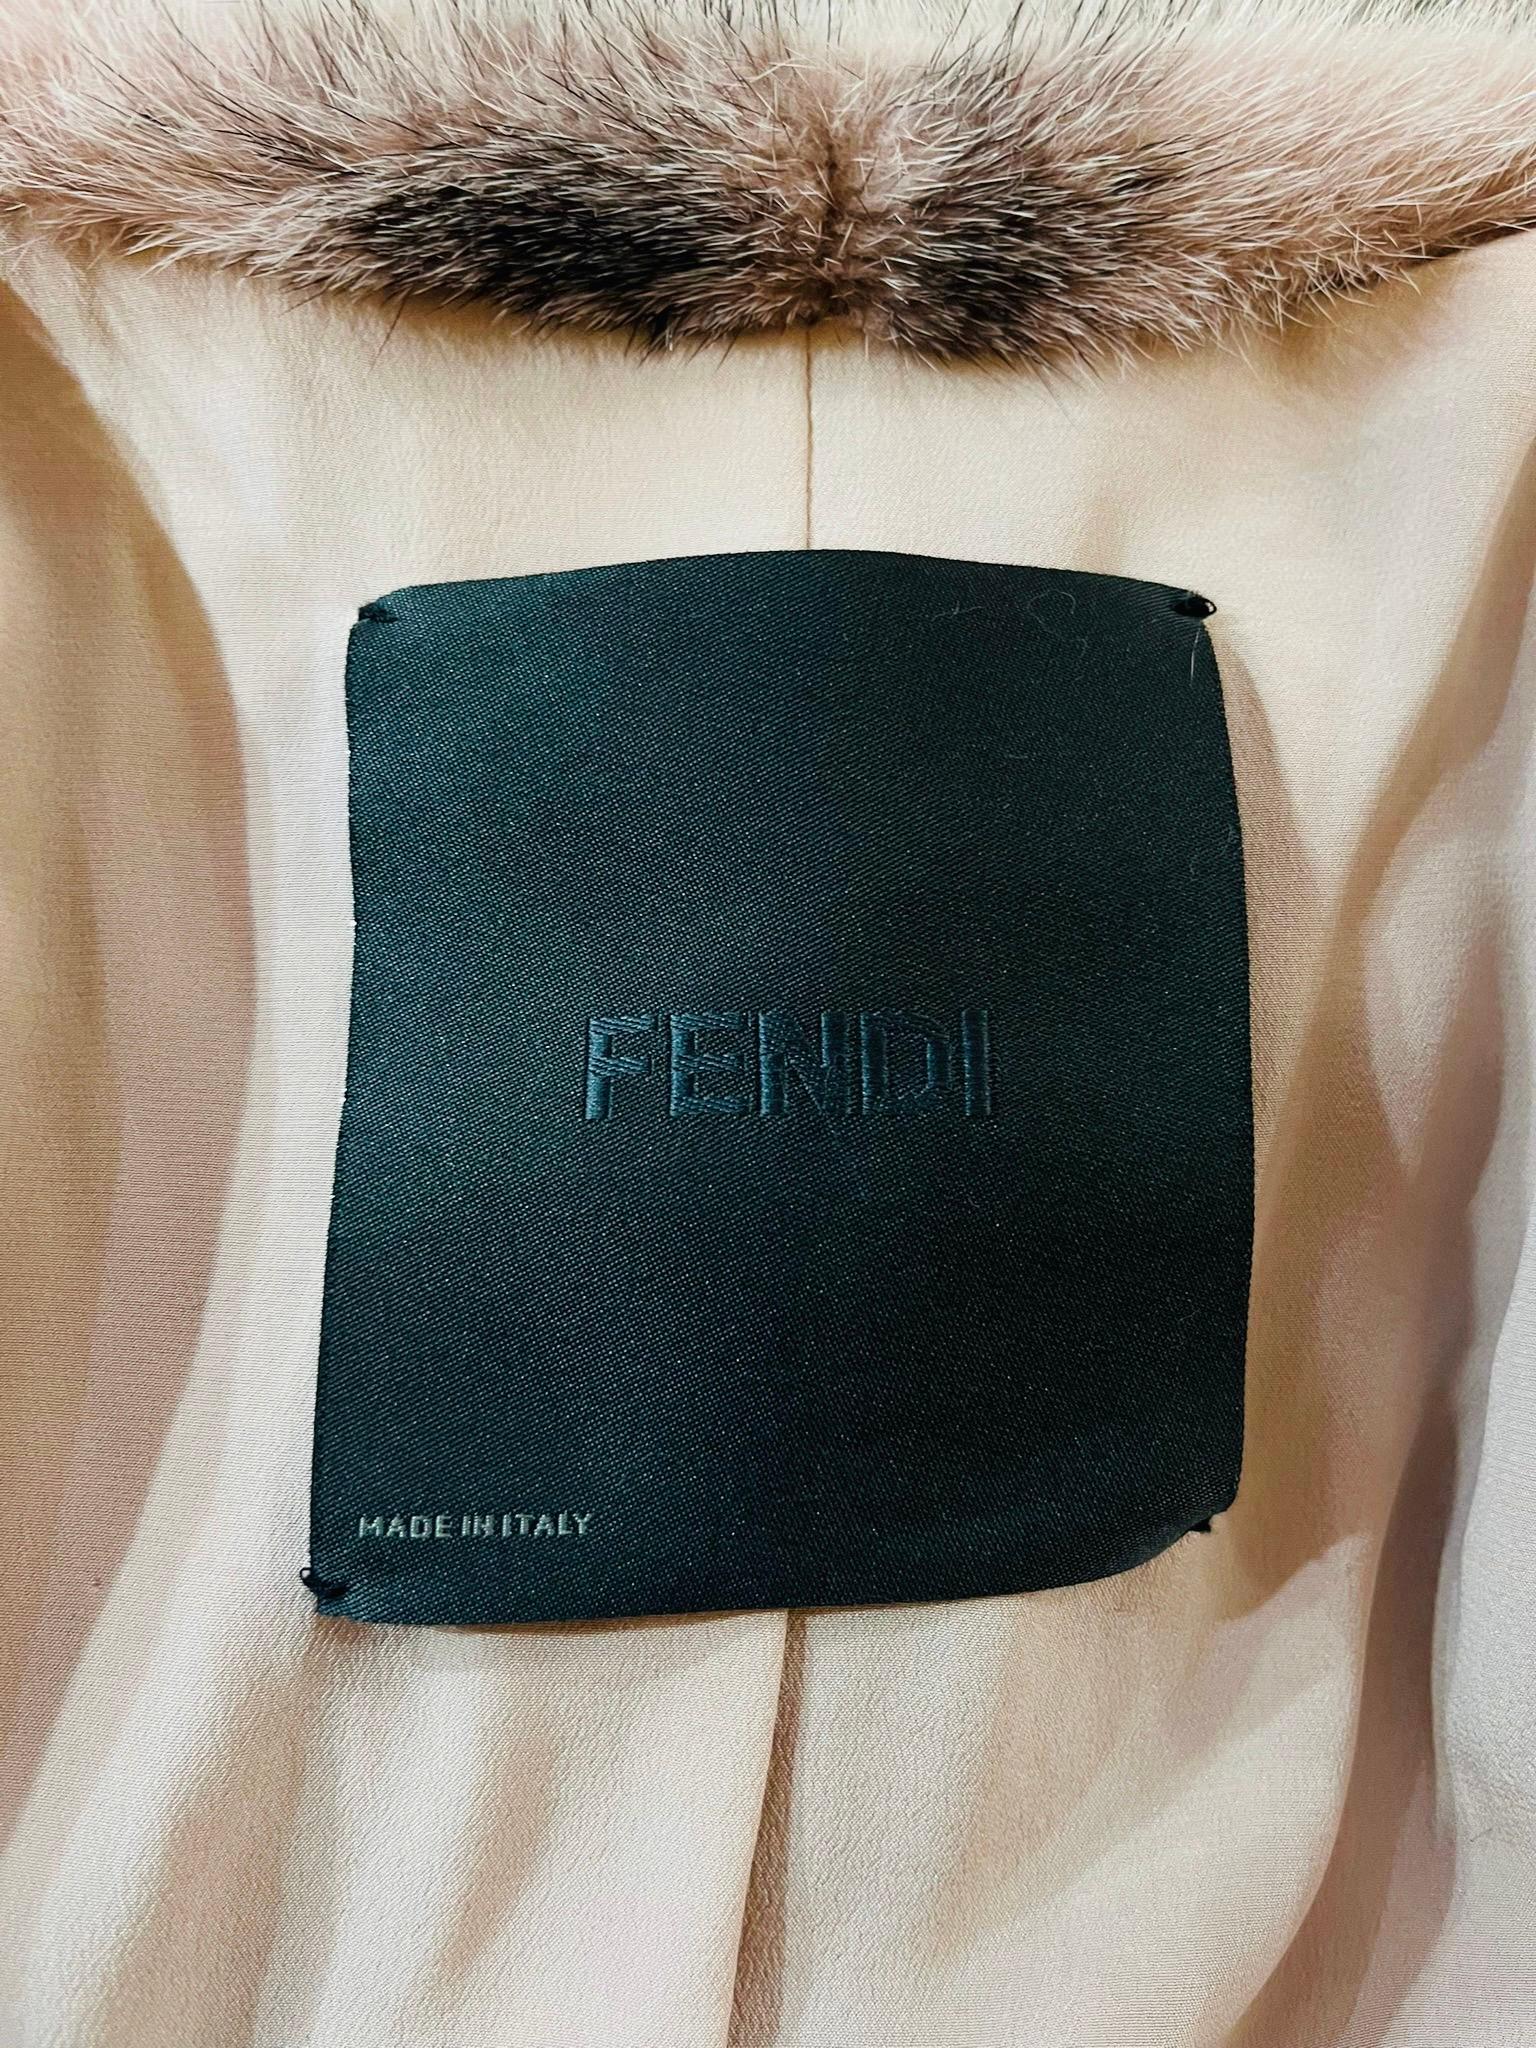 Women's Fendi Mink Fur Coat For Sale